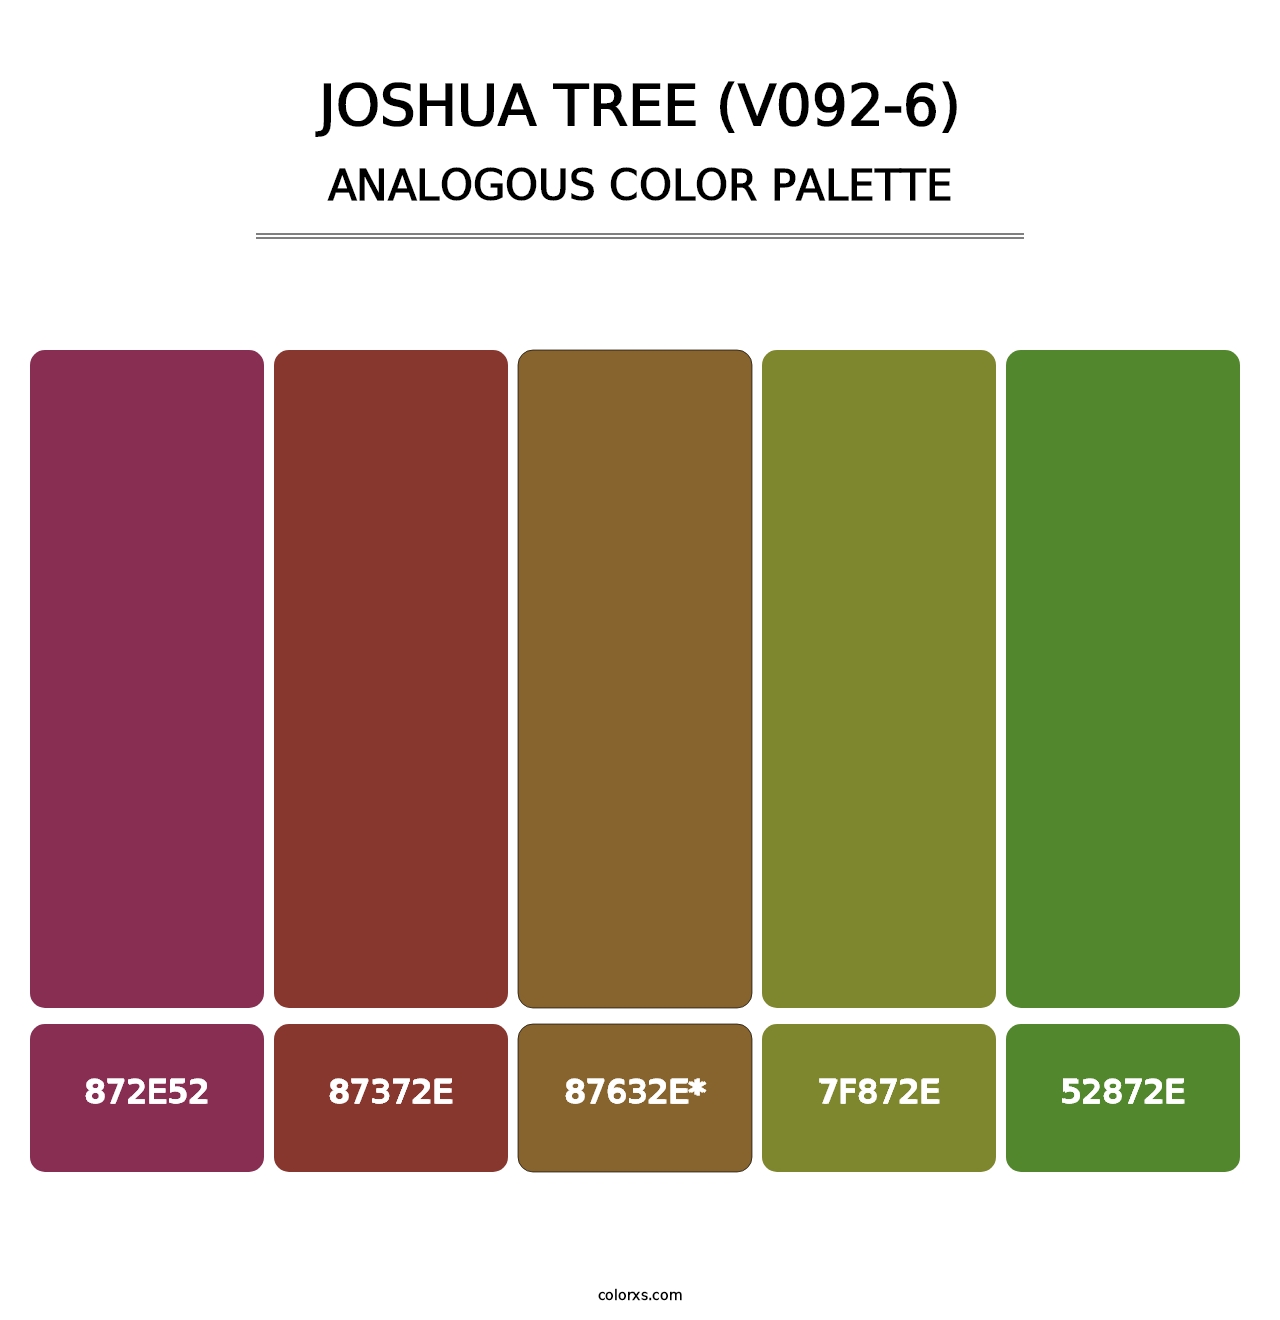 Joshua Tree (V092-6) - Analogous Color Palette